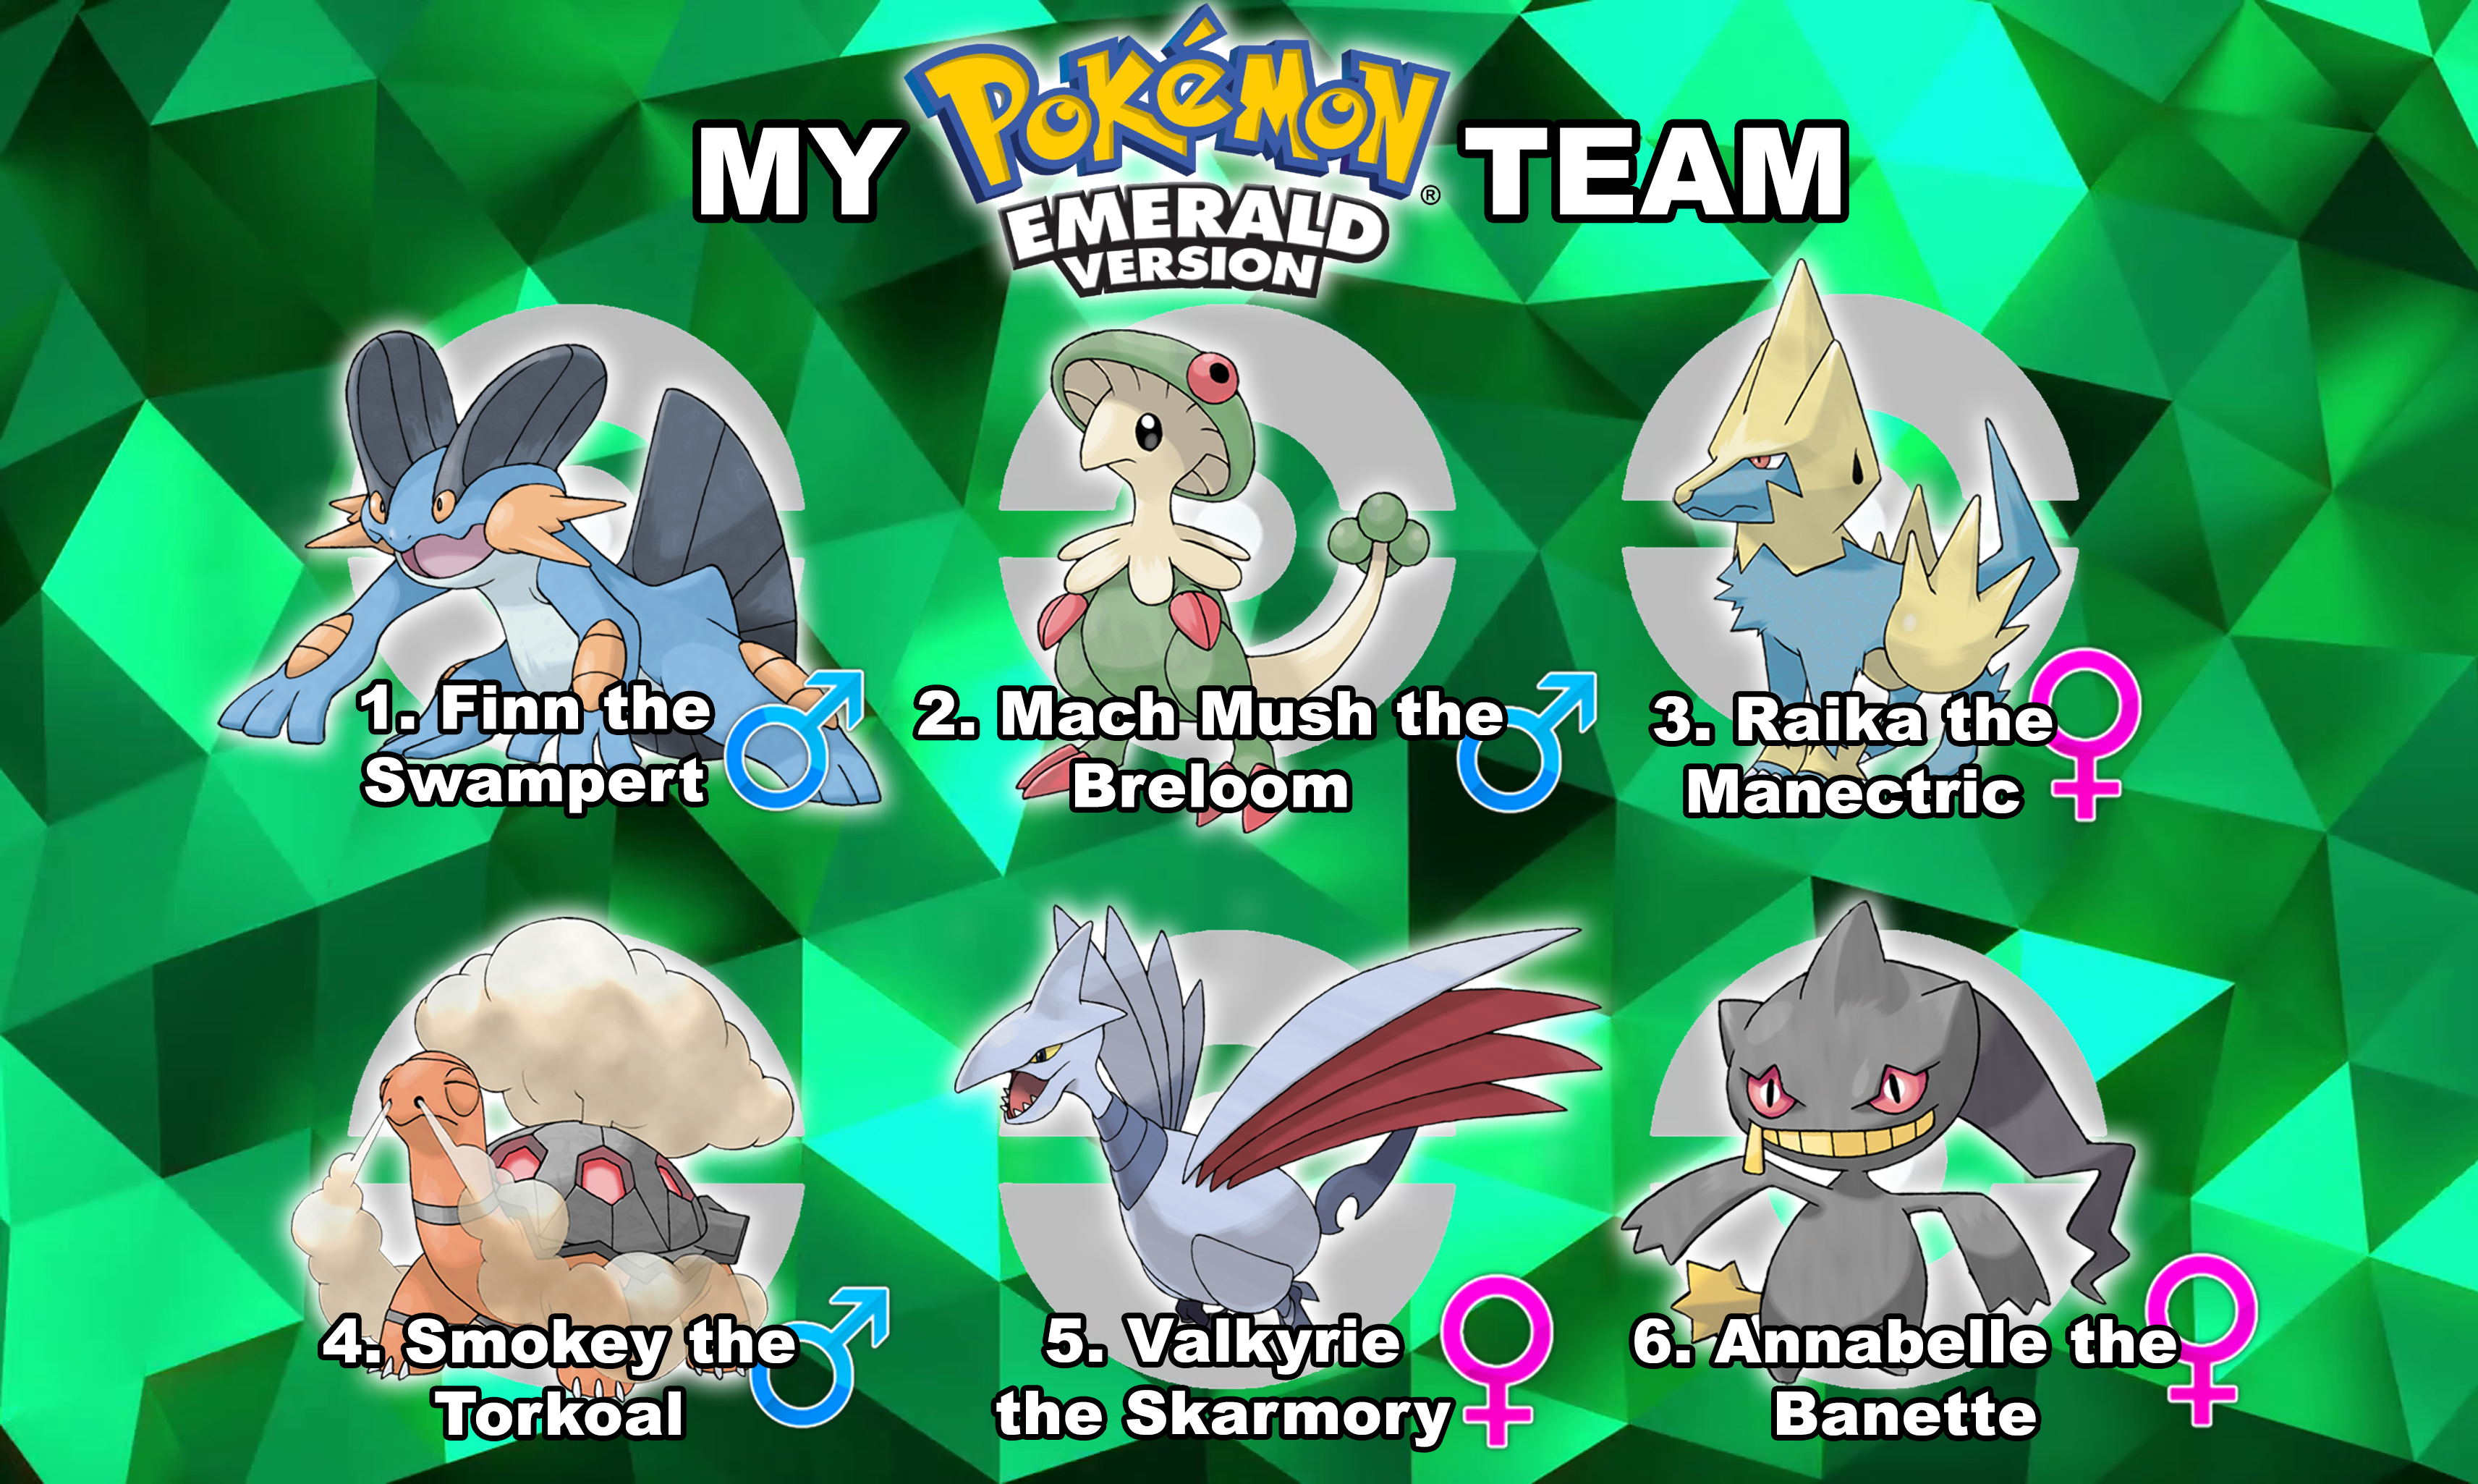 How can I make my team better in Pokemon Emerald? : r/PokemonEmerald